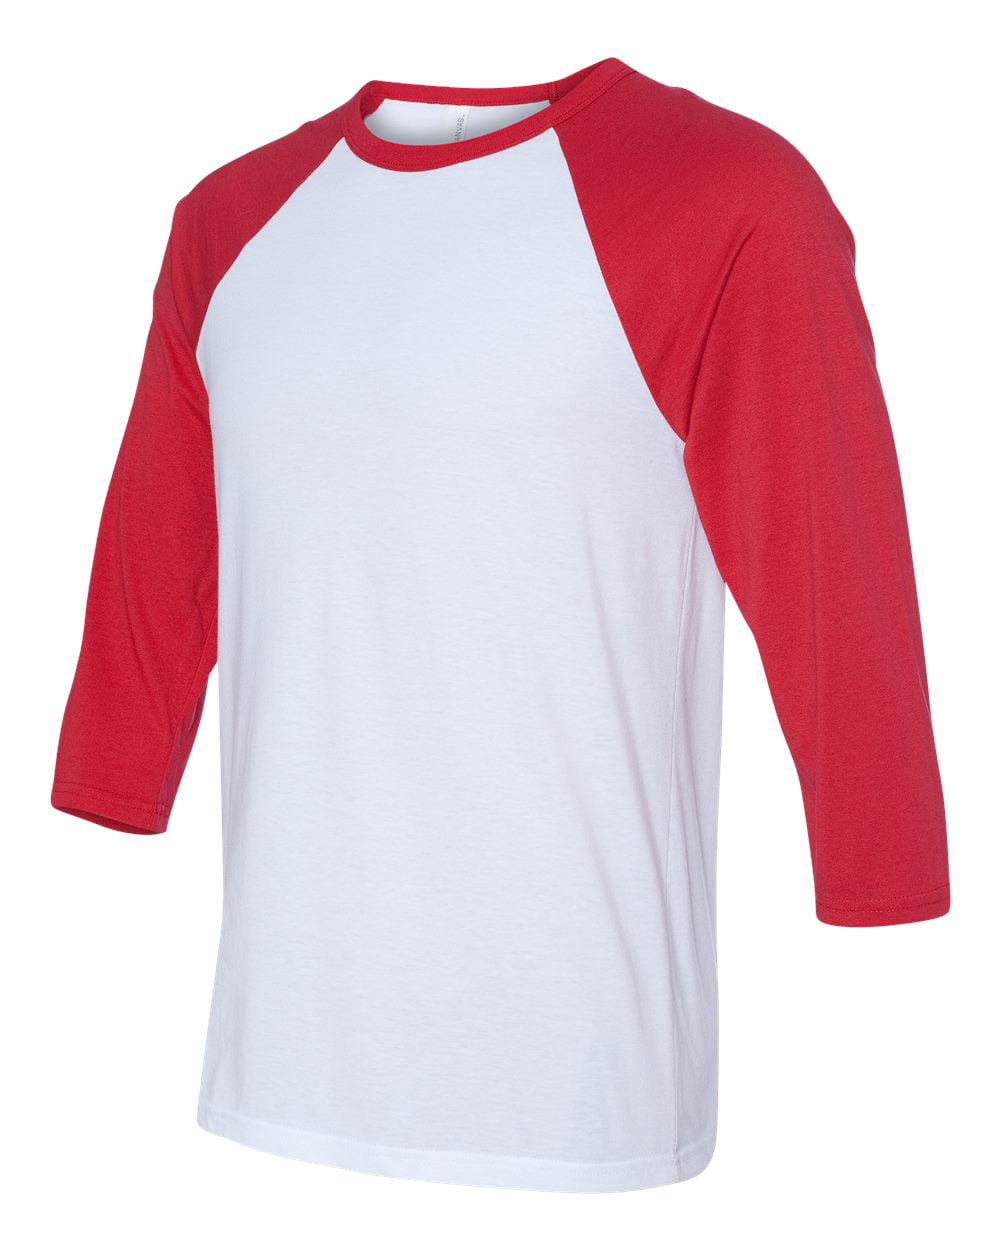 red and white baseball tee short sleeve